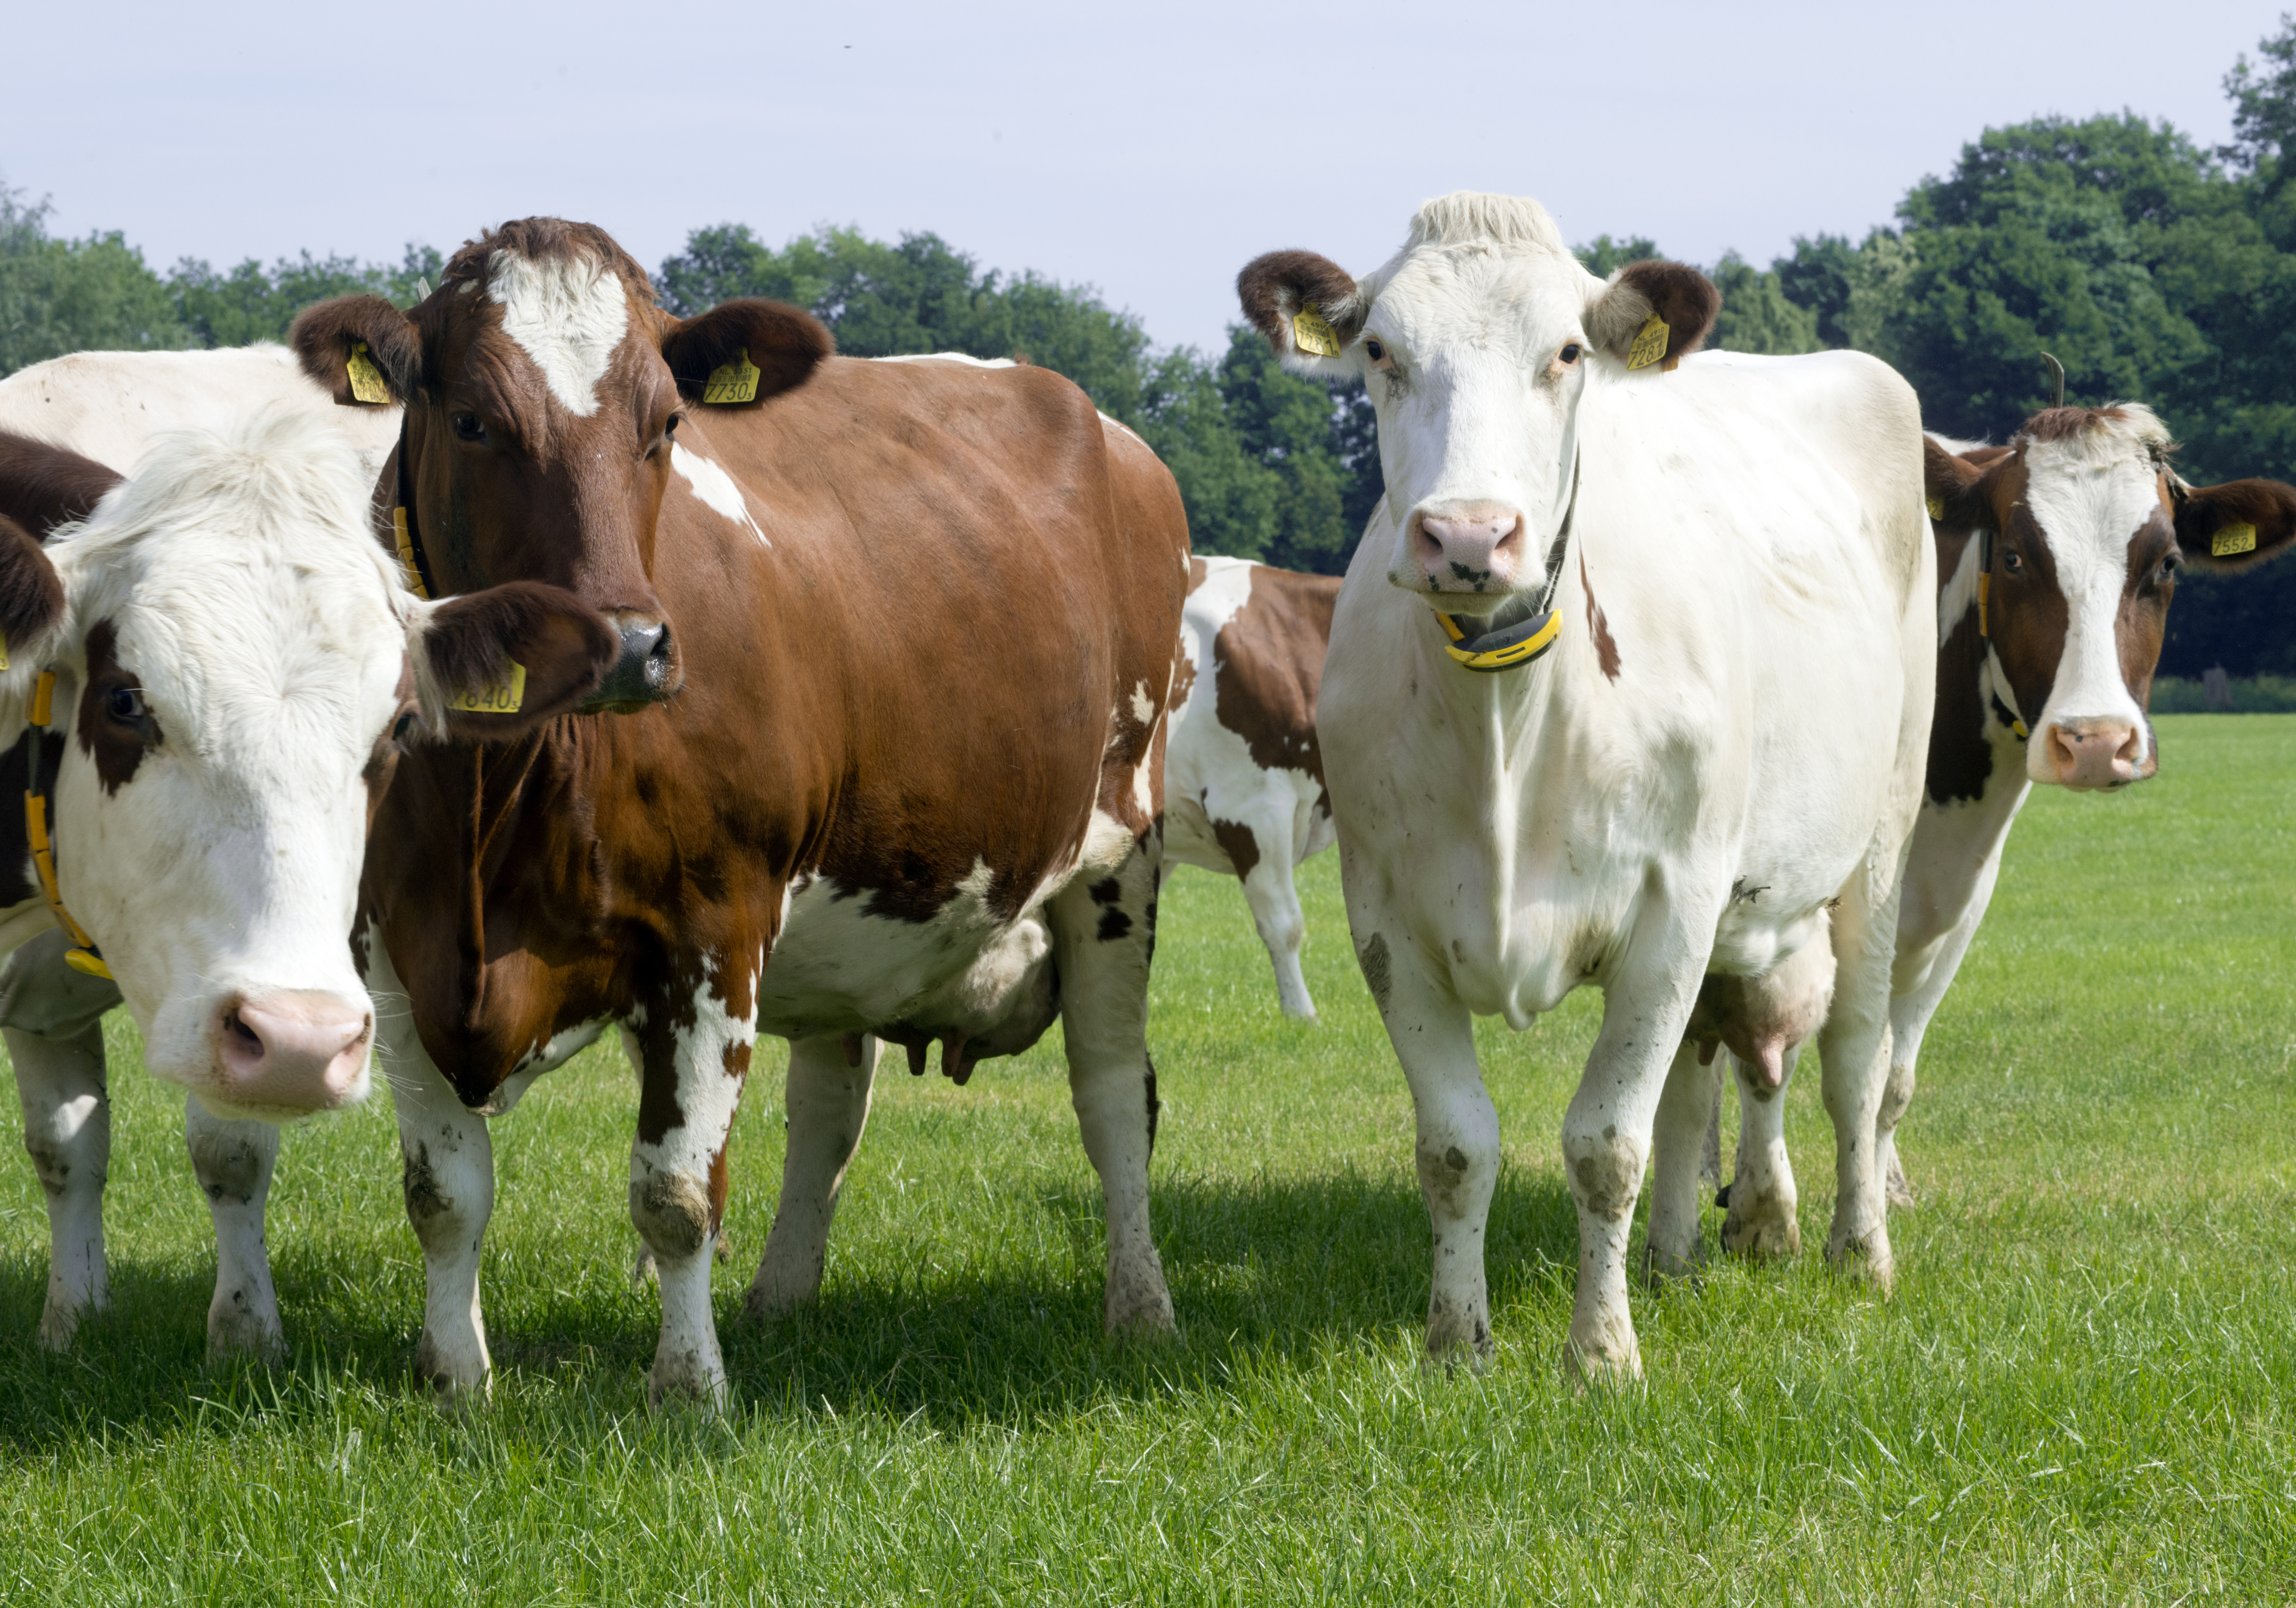 Sensors as a “litmus test” that measures cow health